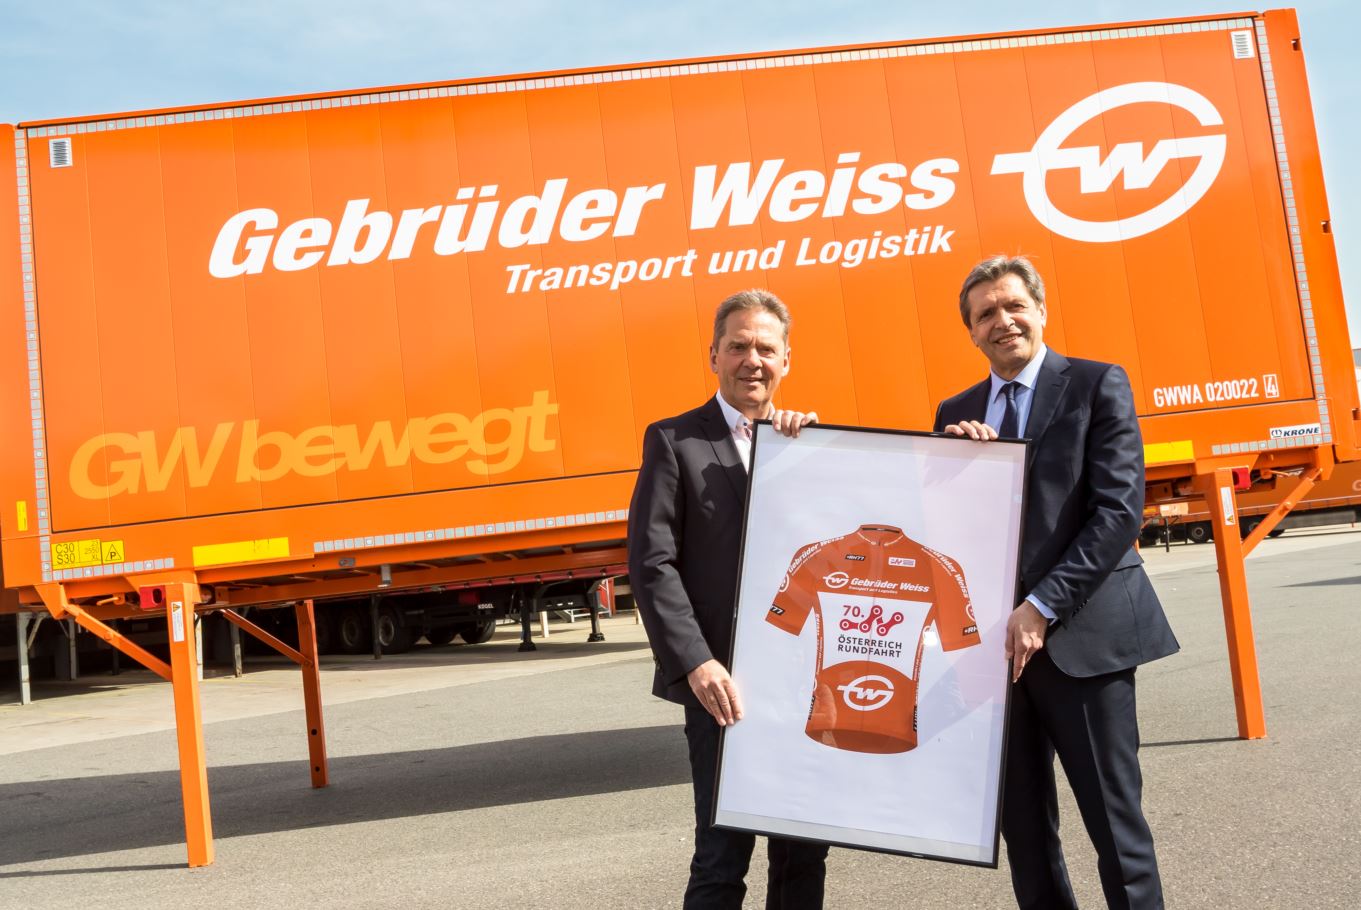 Gebrüder Weiss is the logistics partner of the 70th Tour of Austria